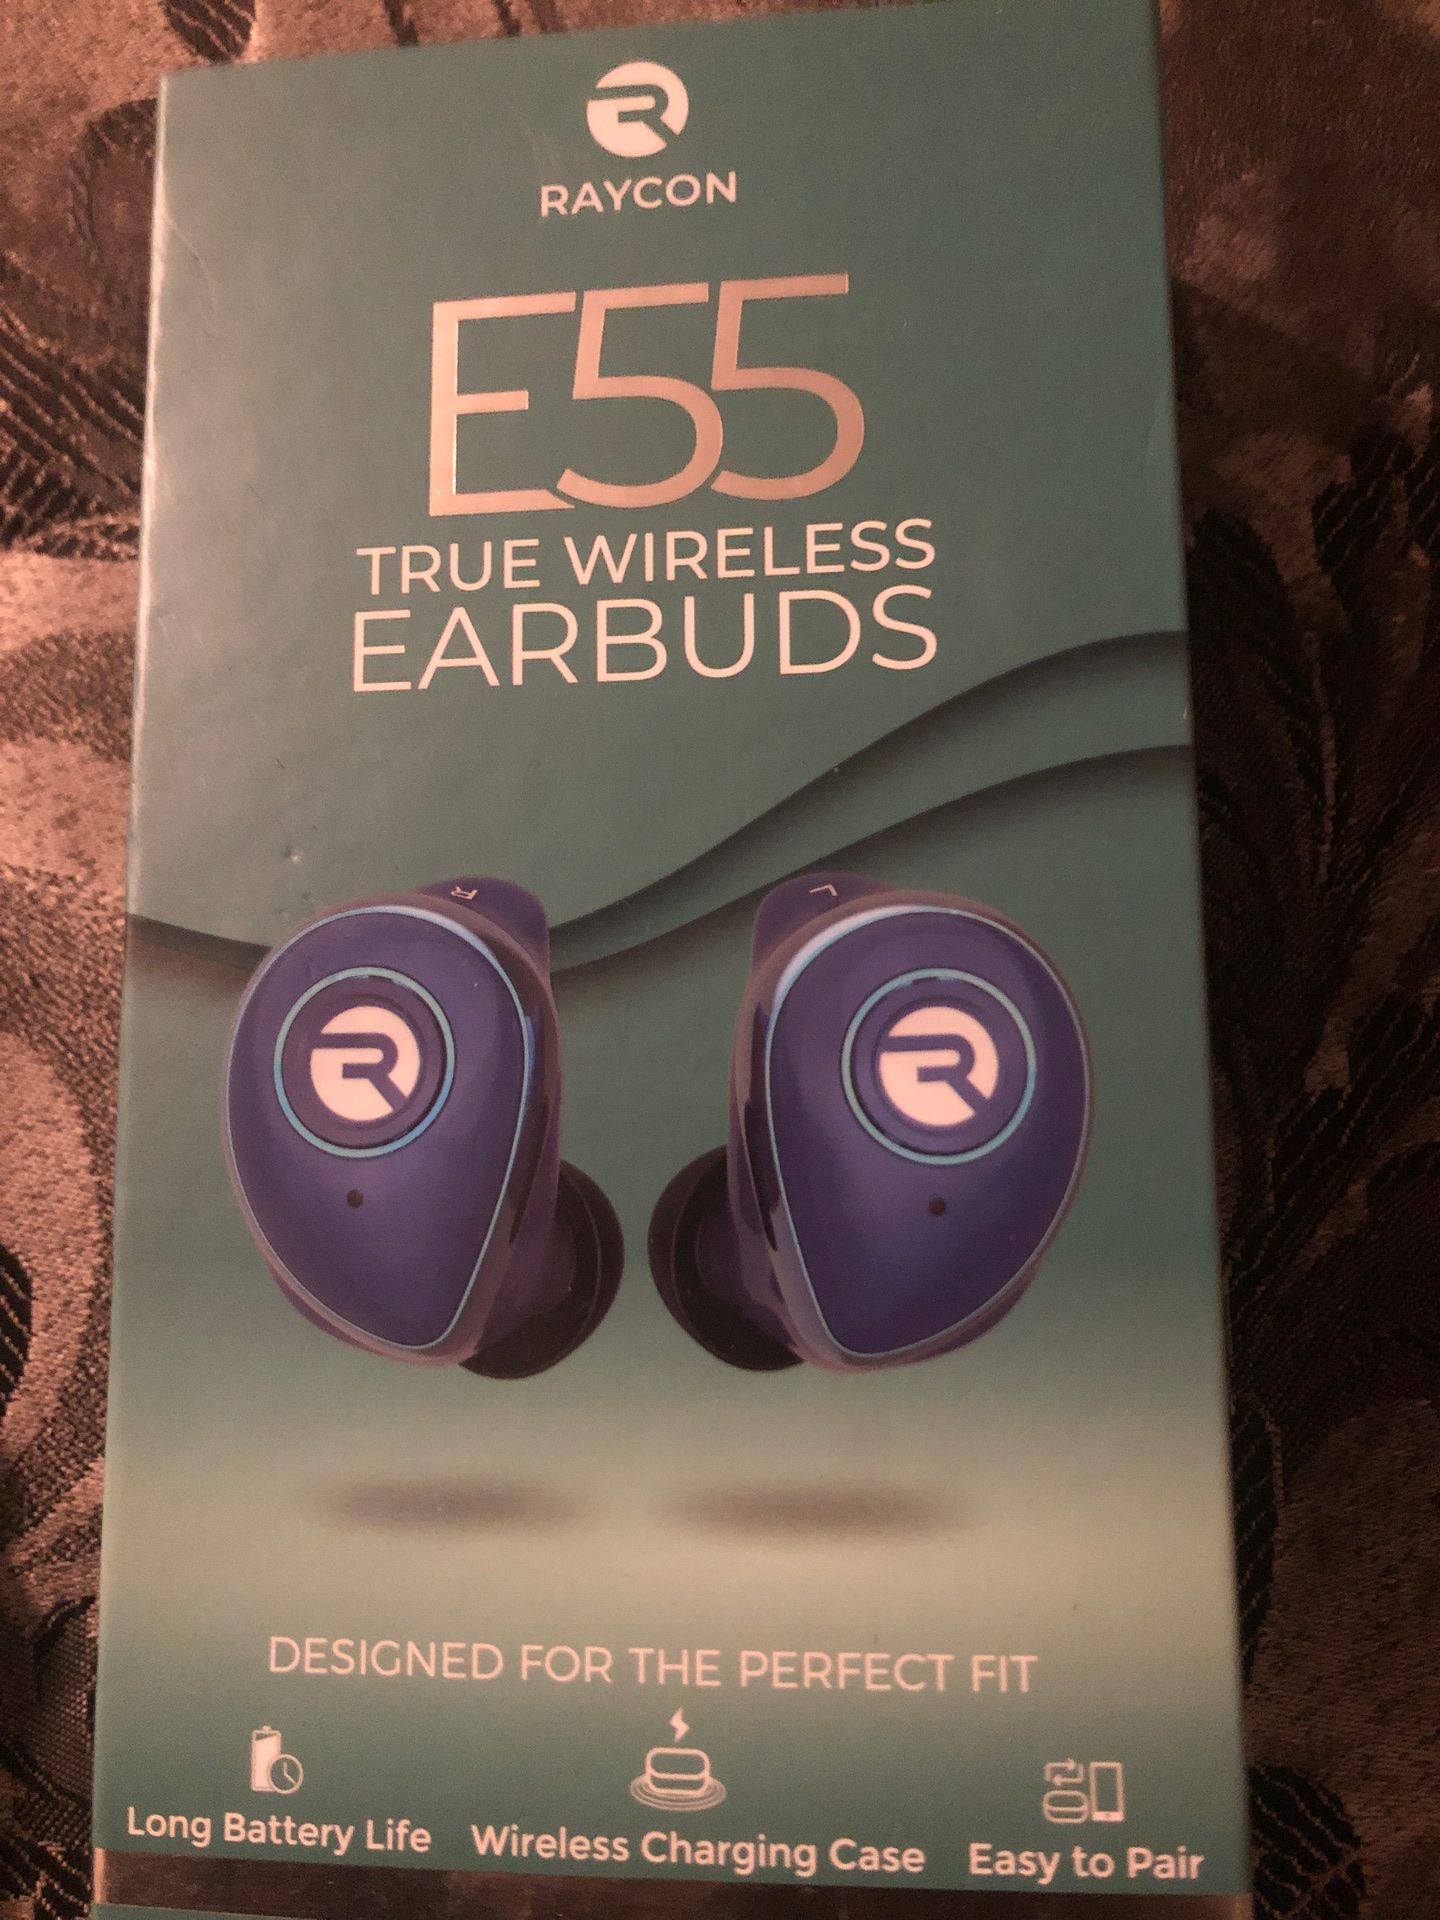 Raycon E55 true wireless earbuds